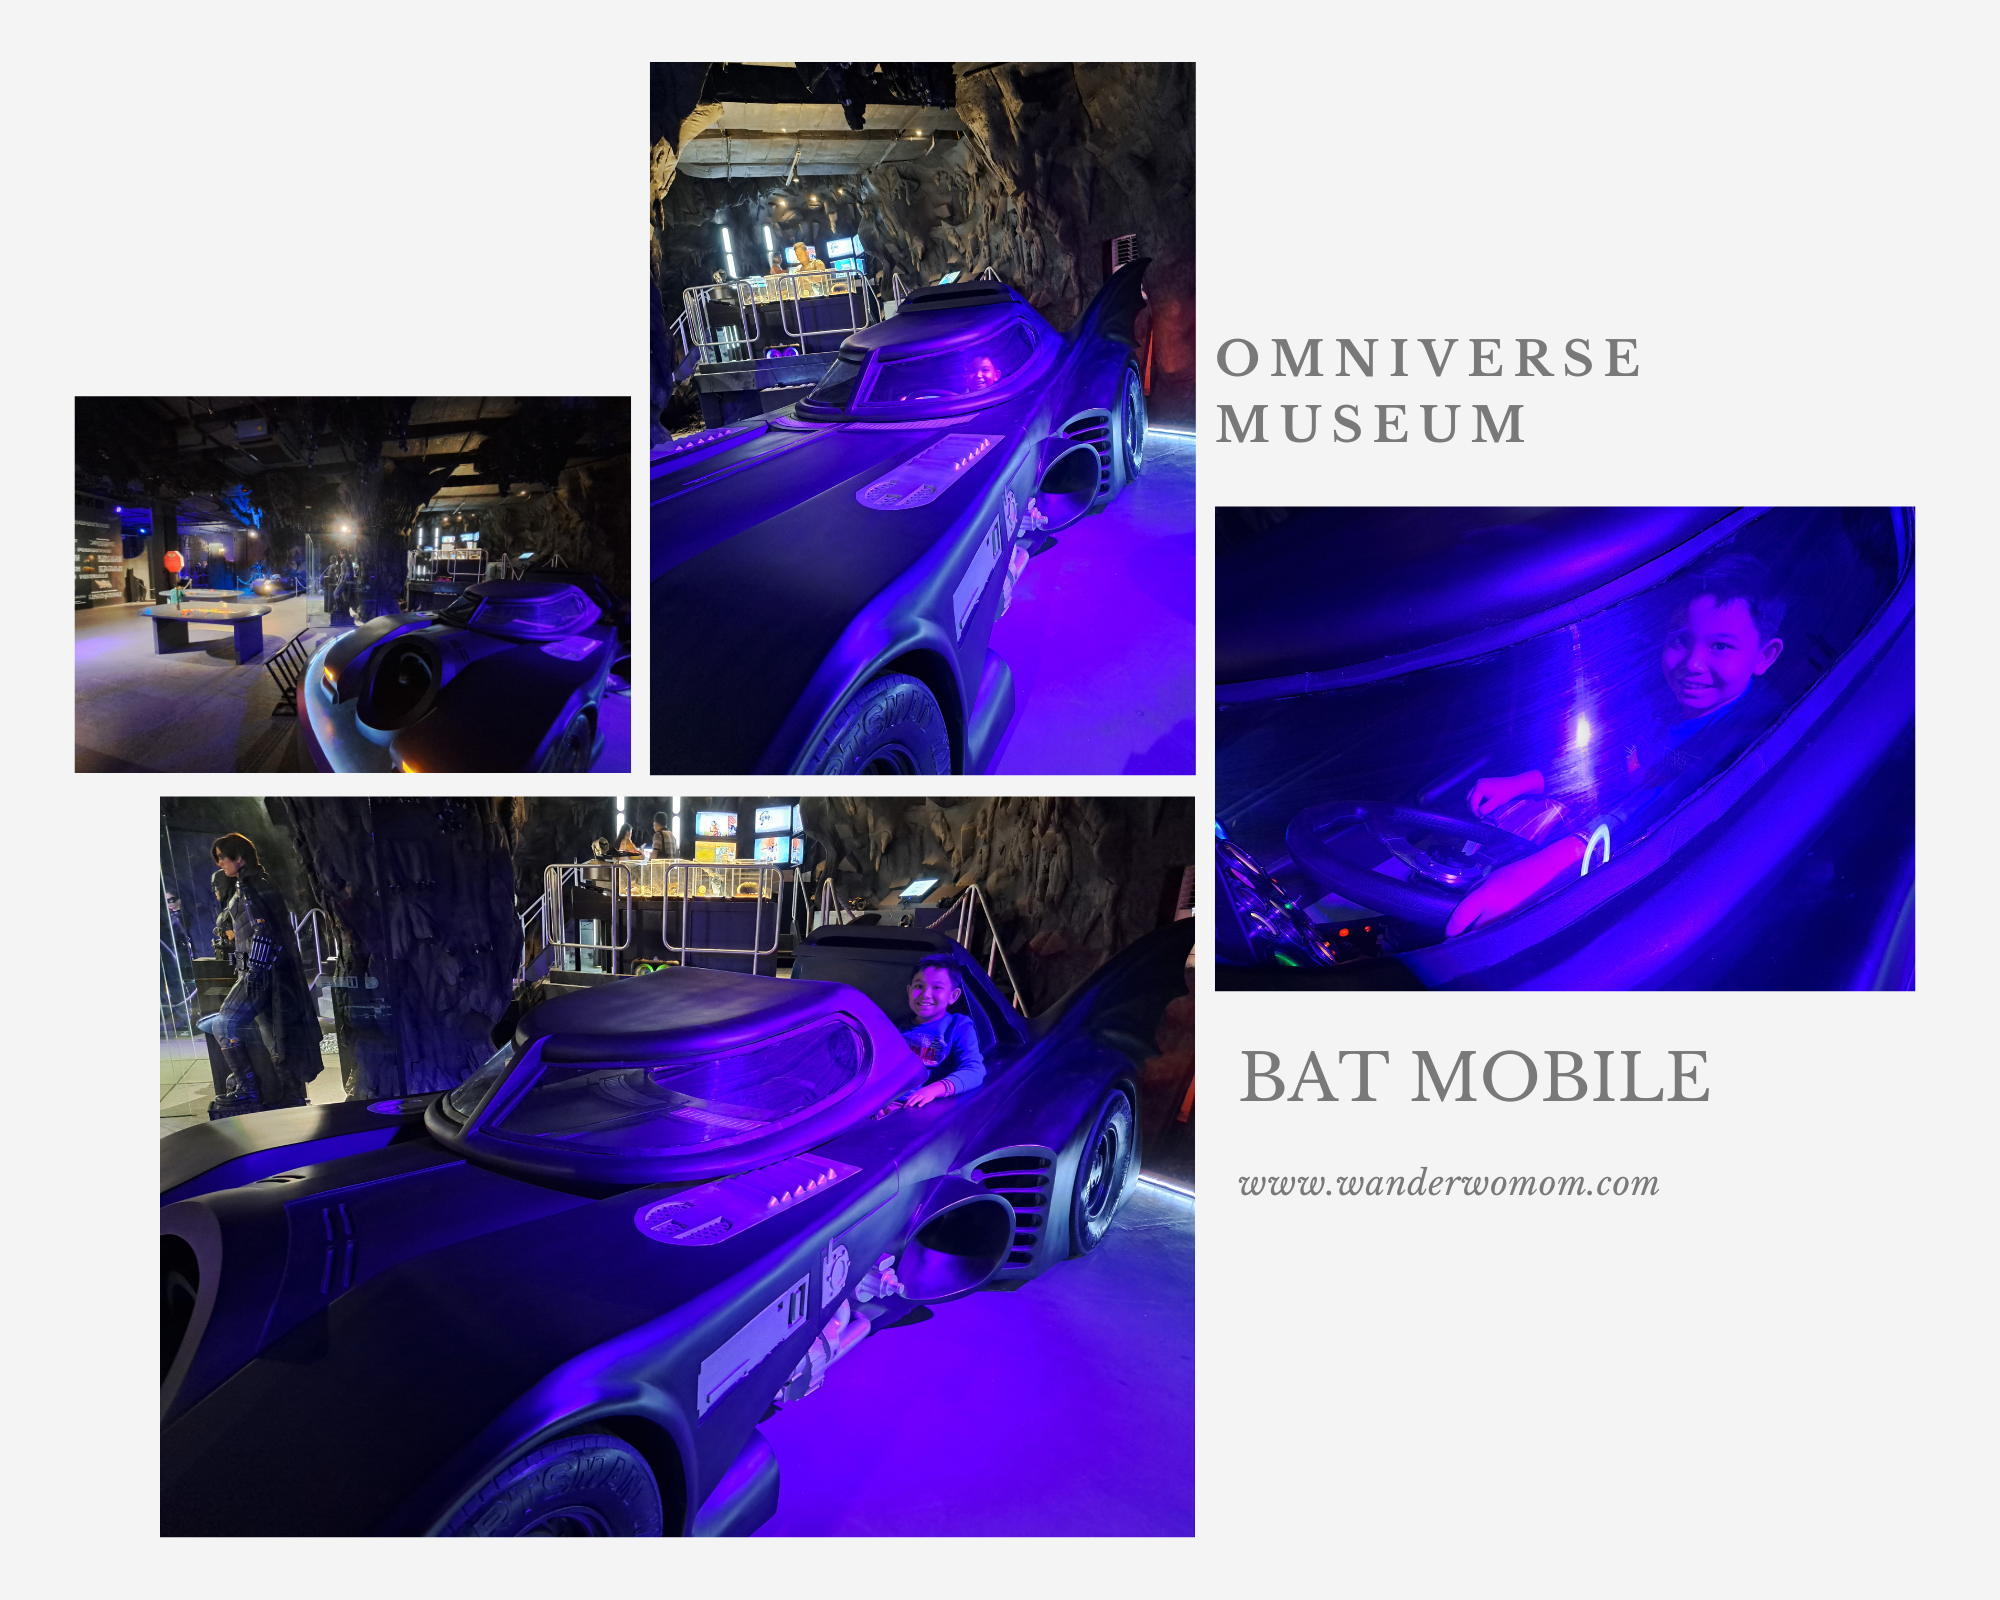 Omniverse Bat Mobile